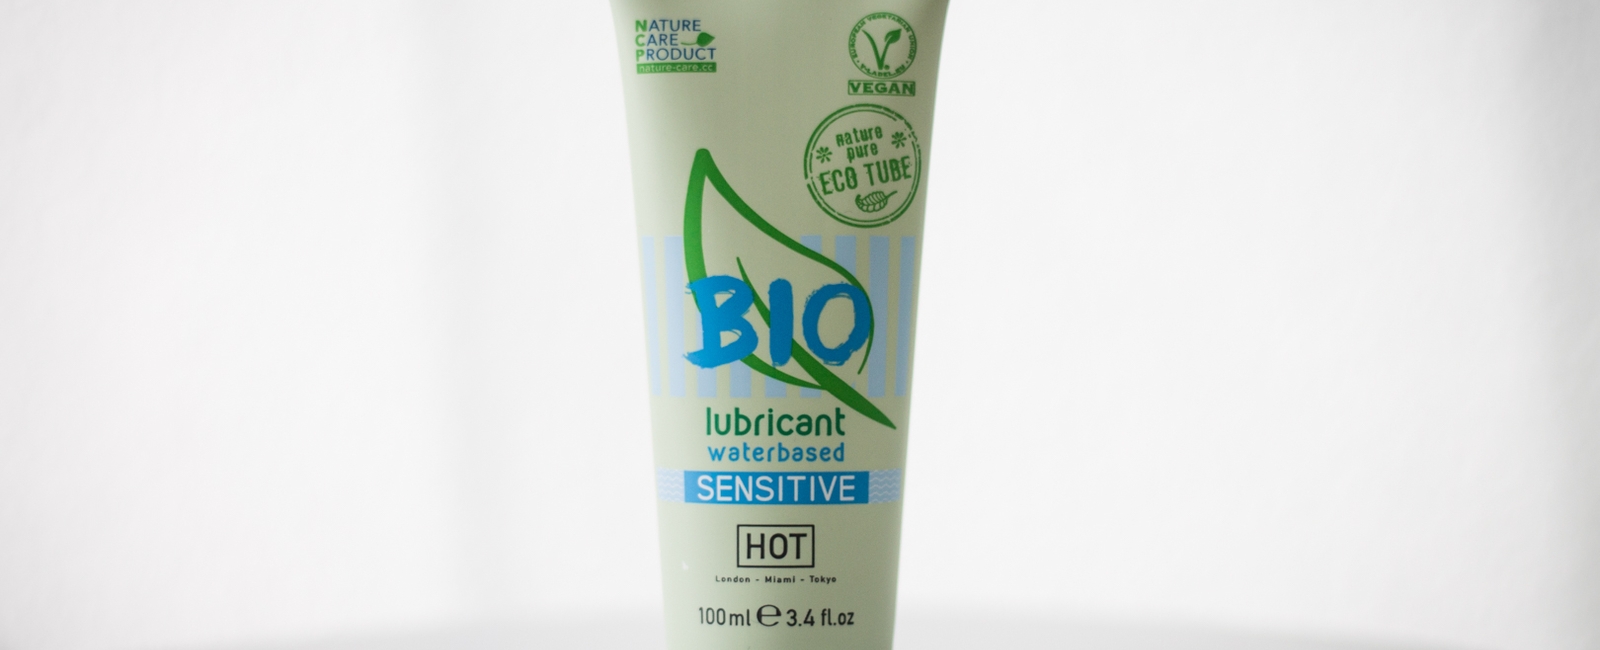 Test du lubrifiant bio Superglide Sensitive - Hot